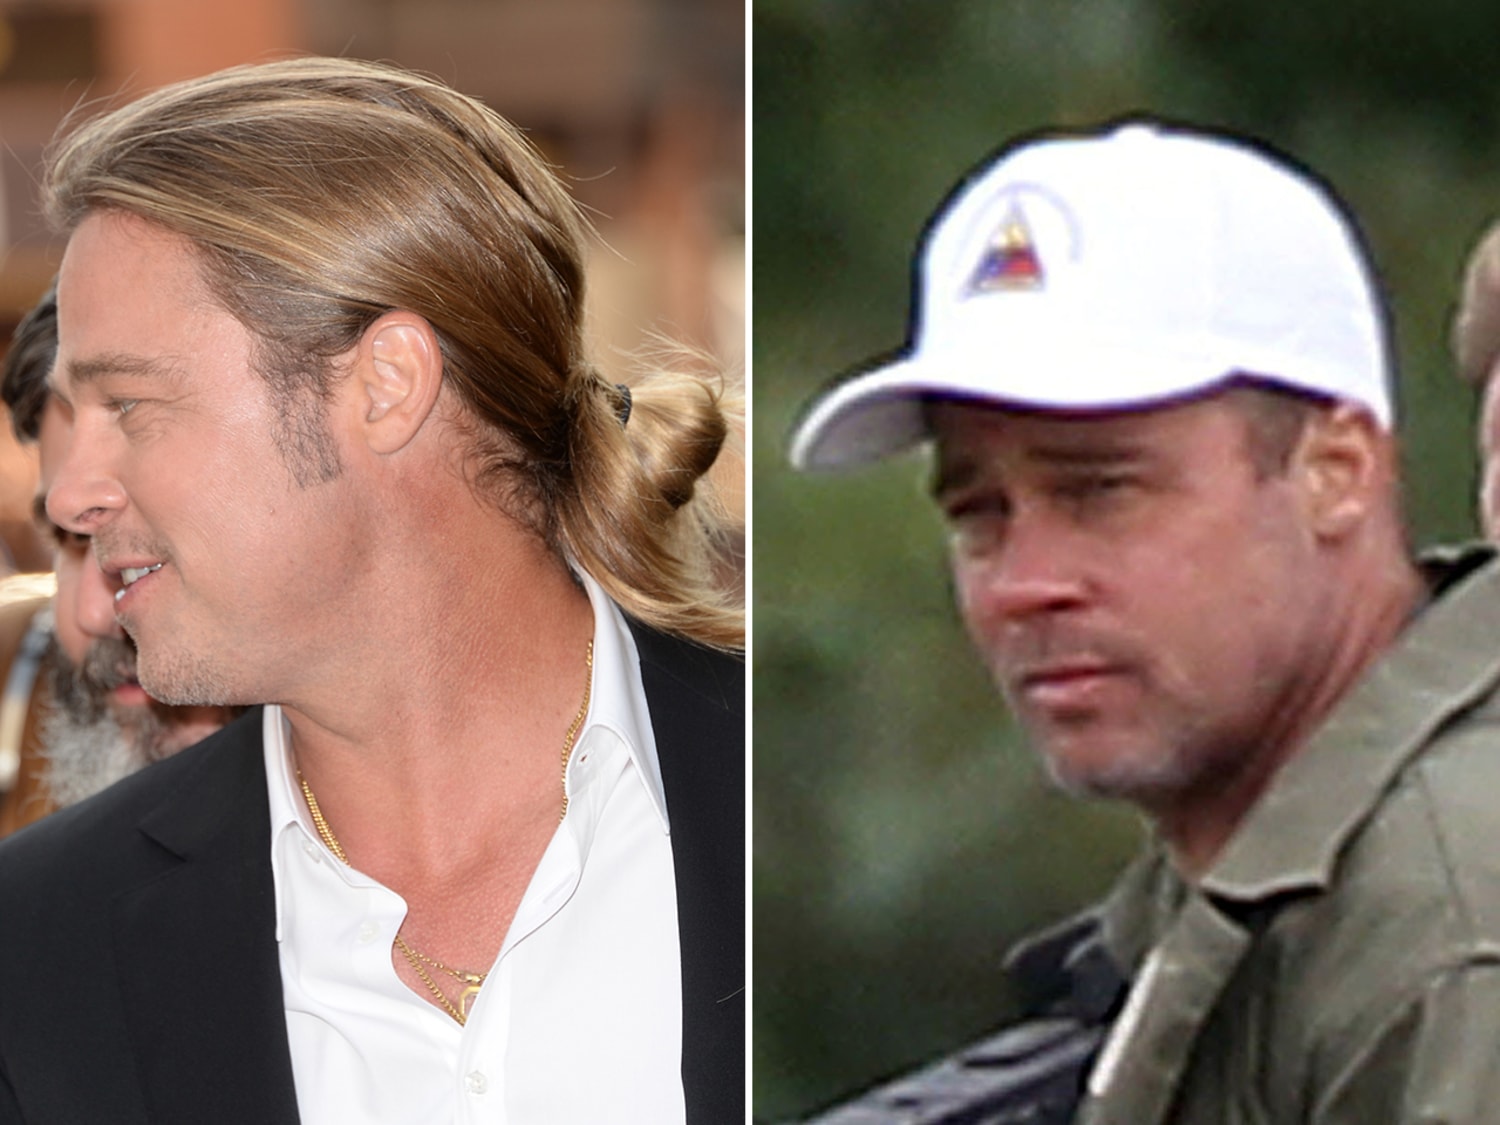 Long story short? Brad Pitt cuts off all his hair again